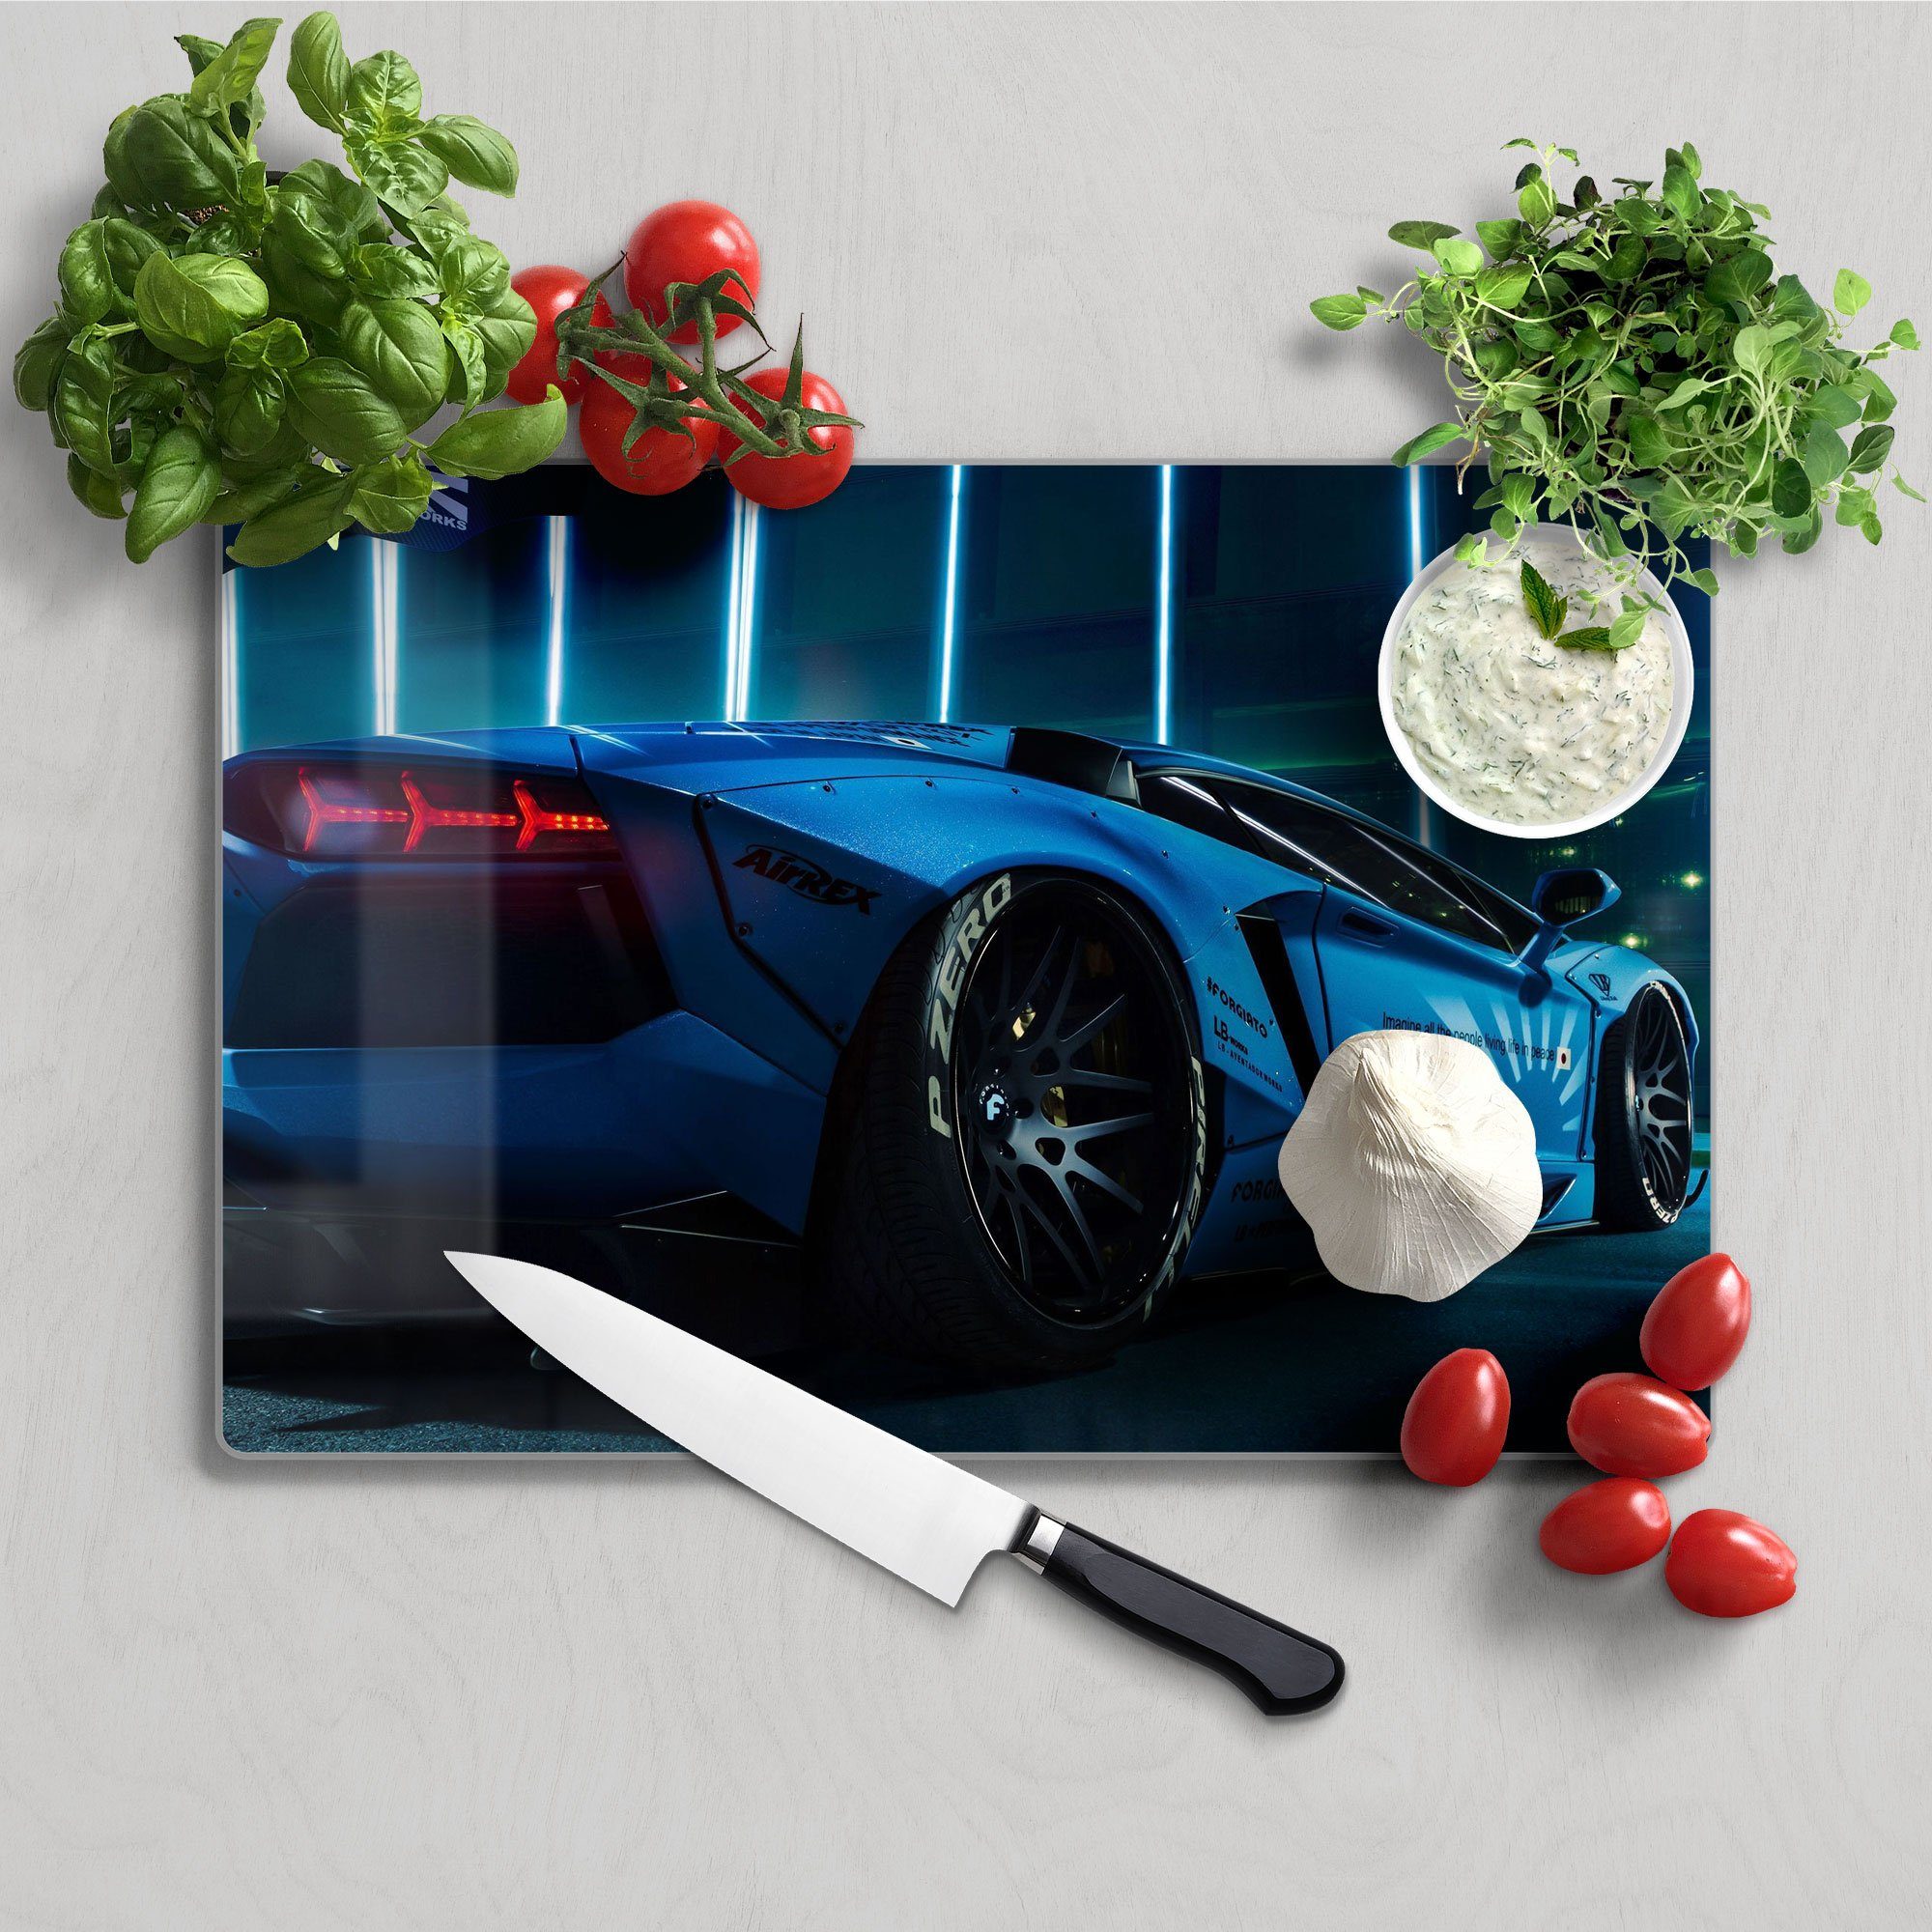 DEQORI Schneidebrett Schneideplatte Platte Aventador', 'Lamborghini Frühstücksbrett Glas